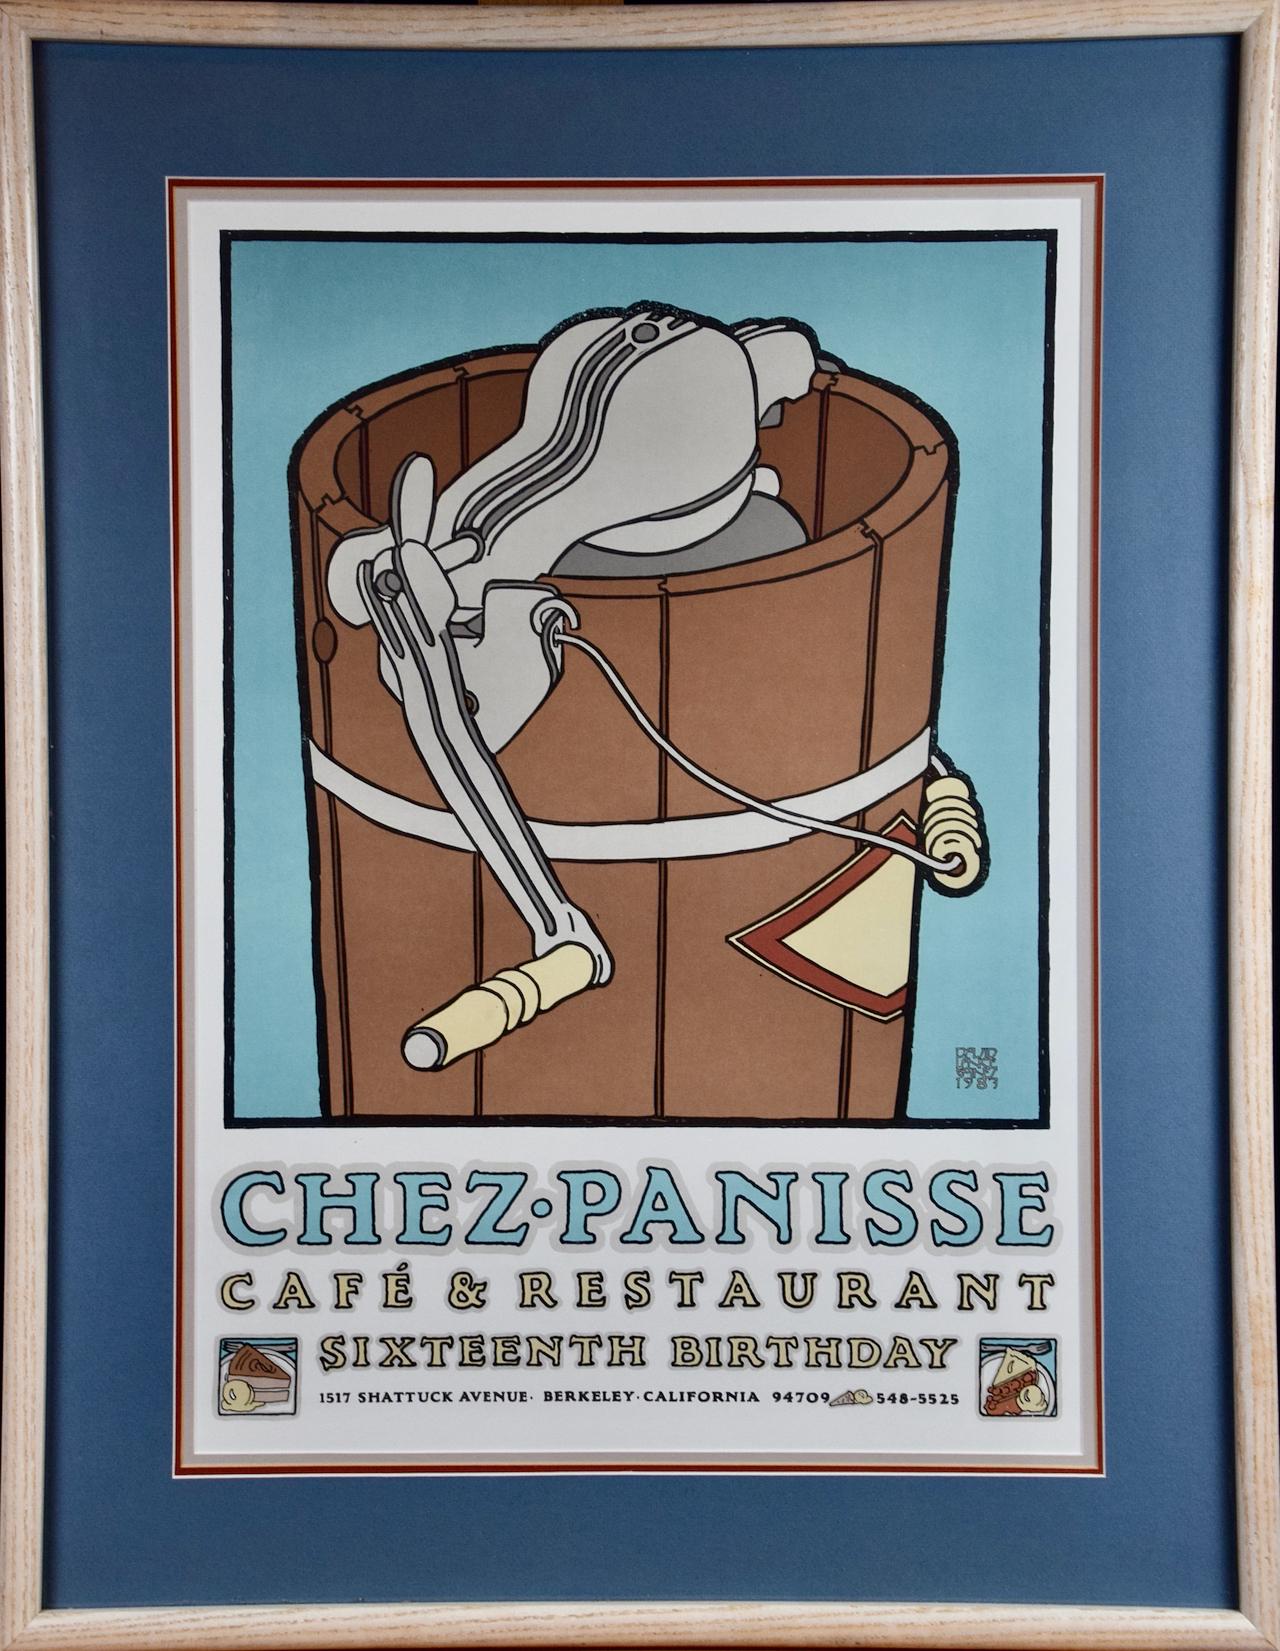 David Lance Goines Interior Print - Chez Panisse Restaurant Birthday Celebration: Original Goines Graphic Art Poster